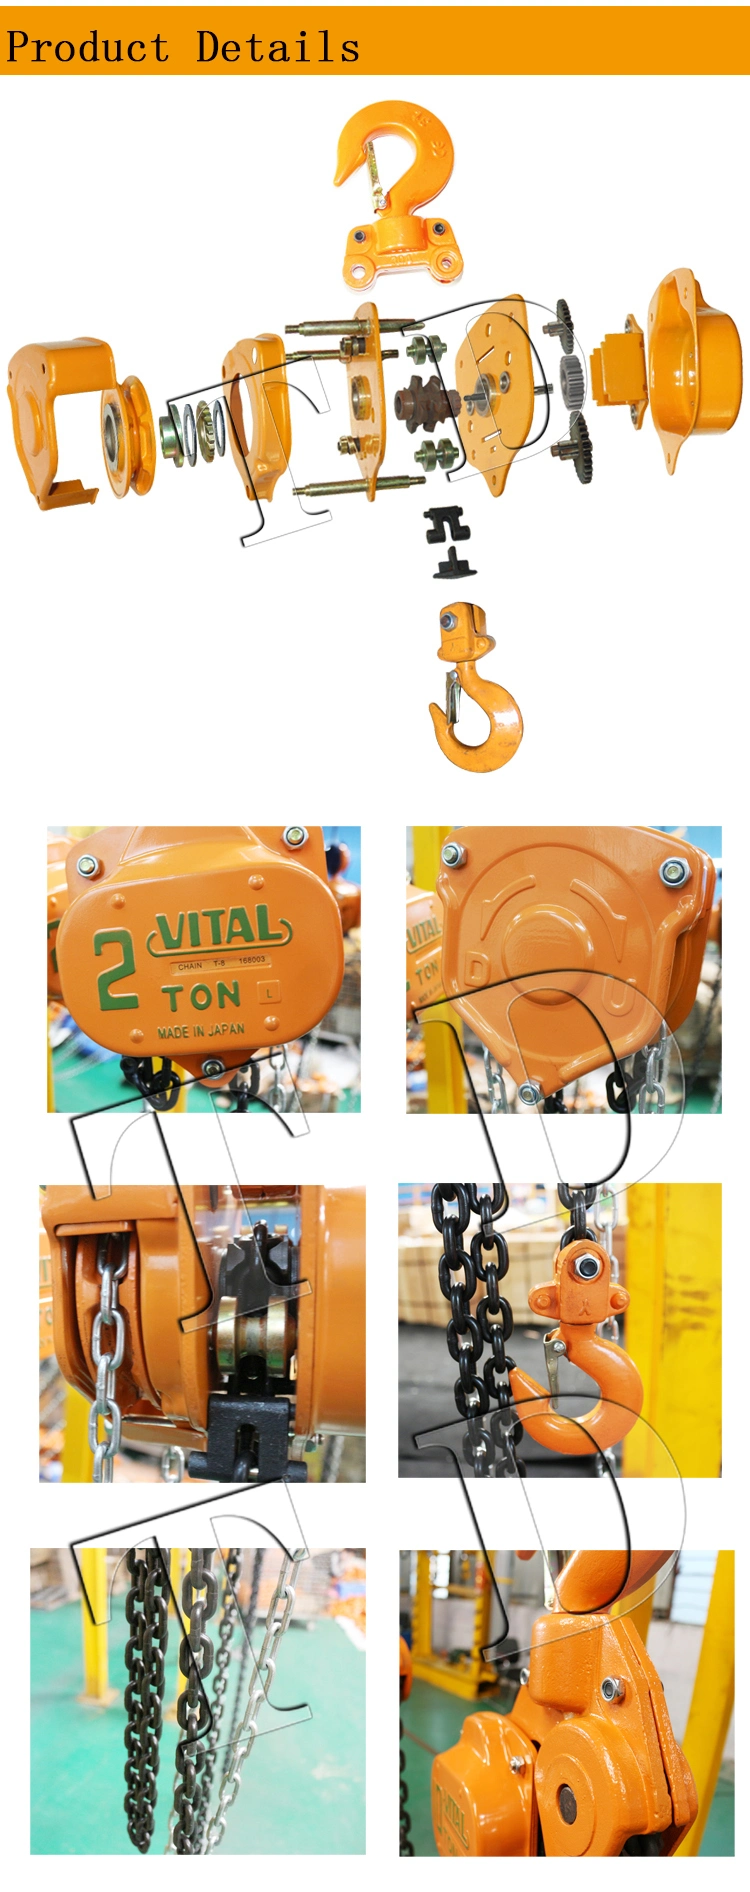 Manual 1ton 3 Meters Vital Chain Block with G80 Load Chain Chain Hoist